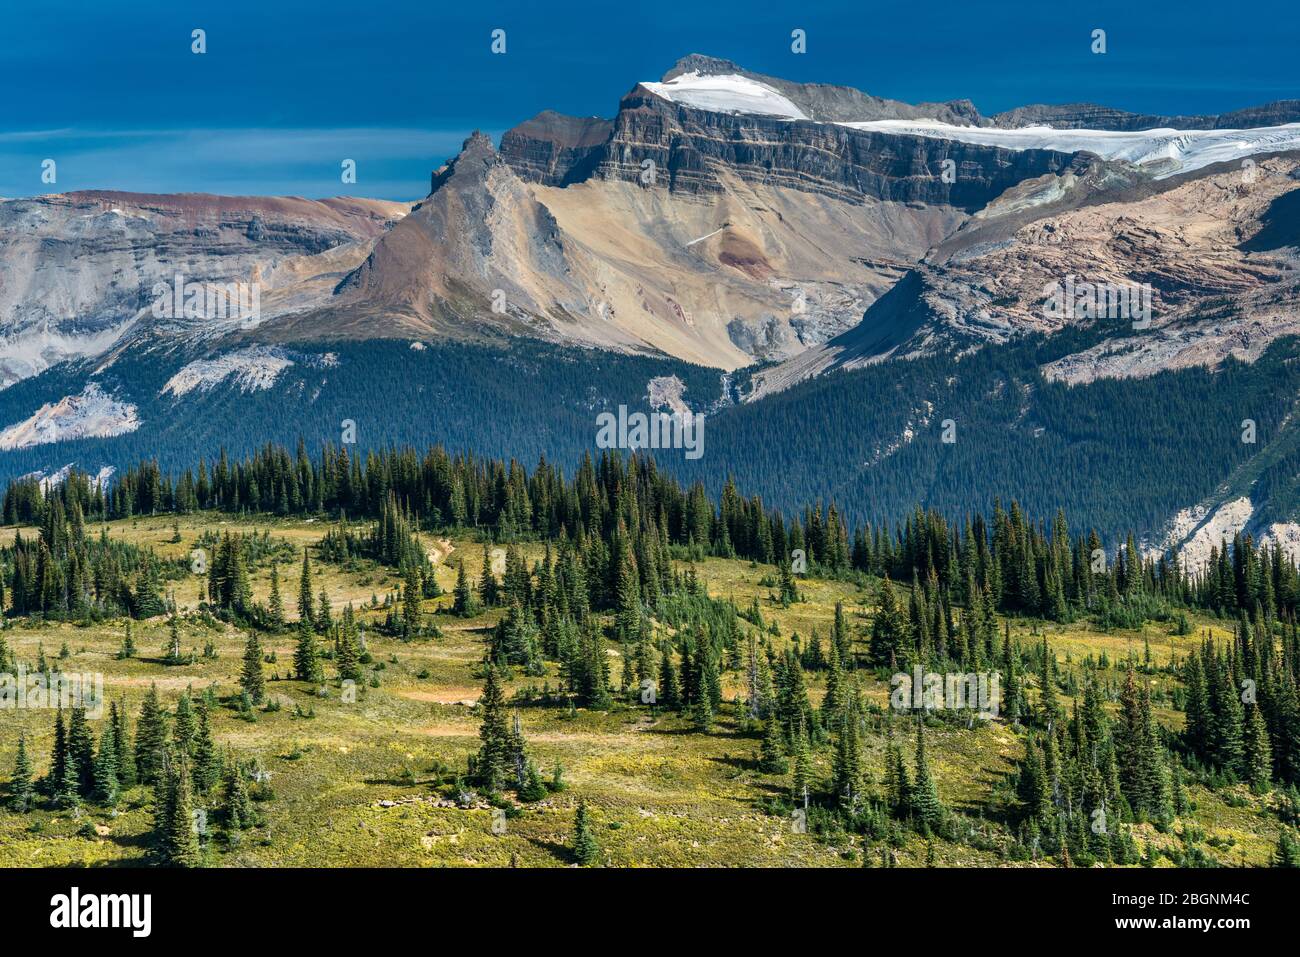 Waputik Range over Yoho Valley, Mt Balfour, Mt Gordon on left, Iceline Trail at tree line, Canadian Rockies, Yoho Natl Park, British Columbia, Canada Stock Photo